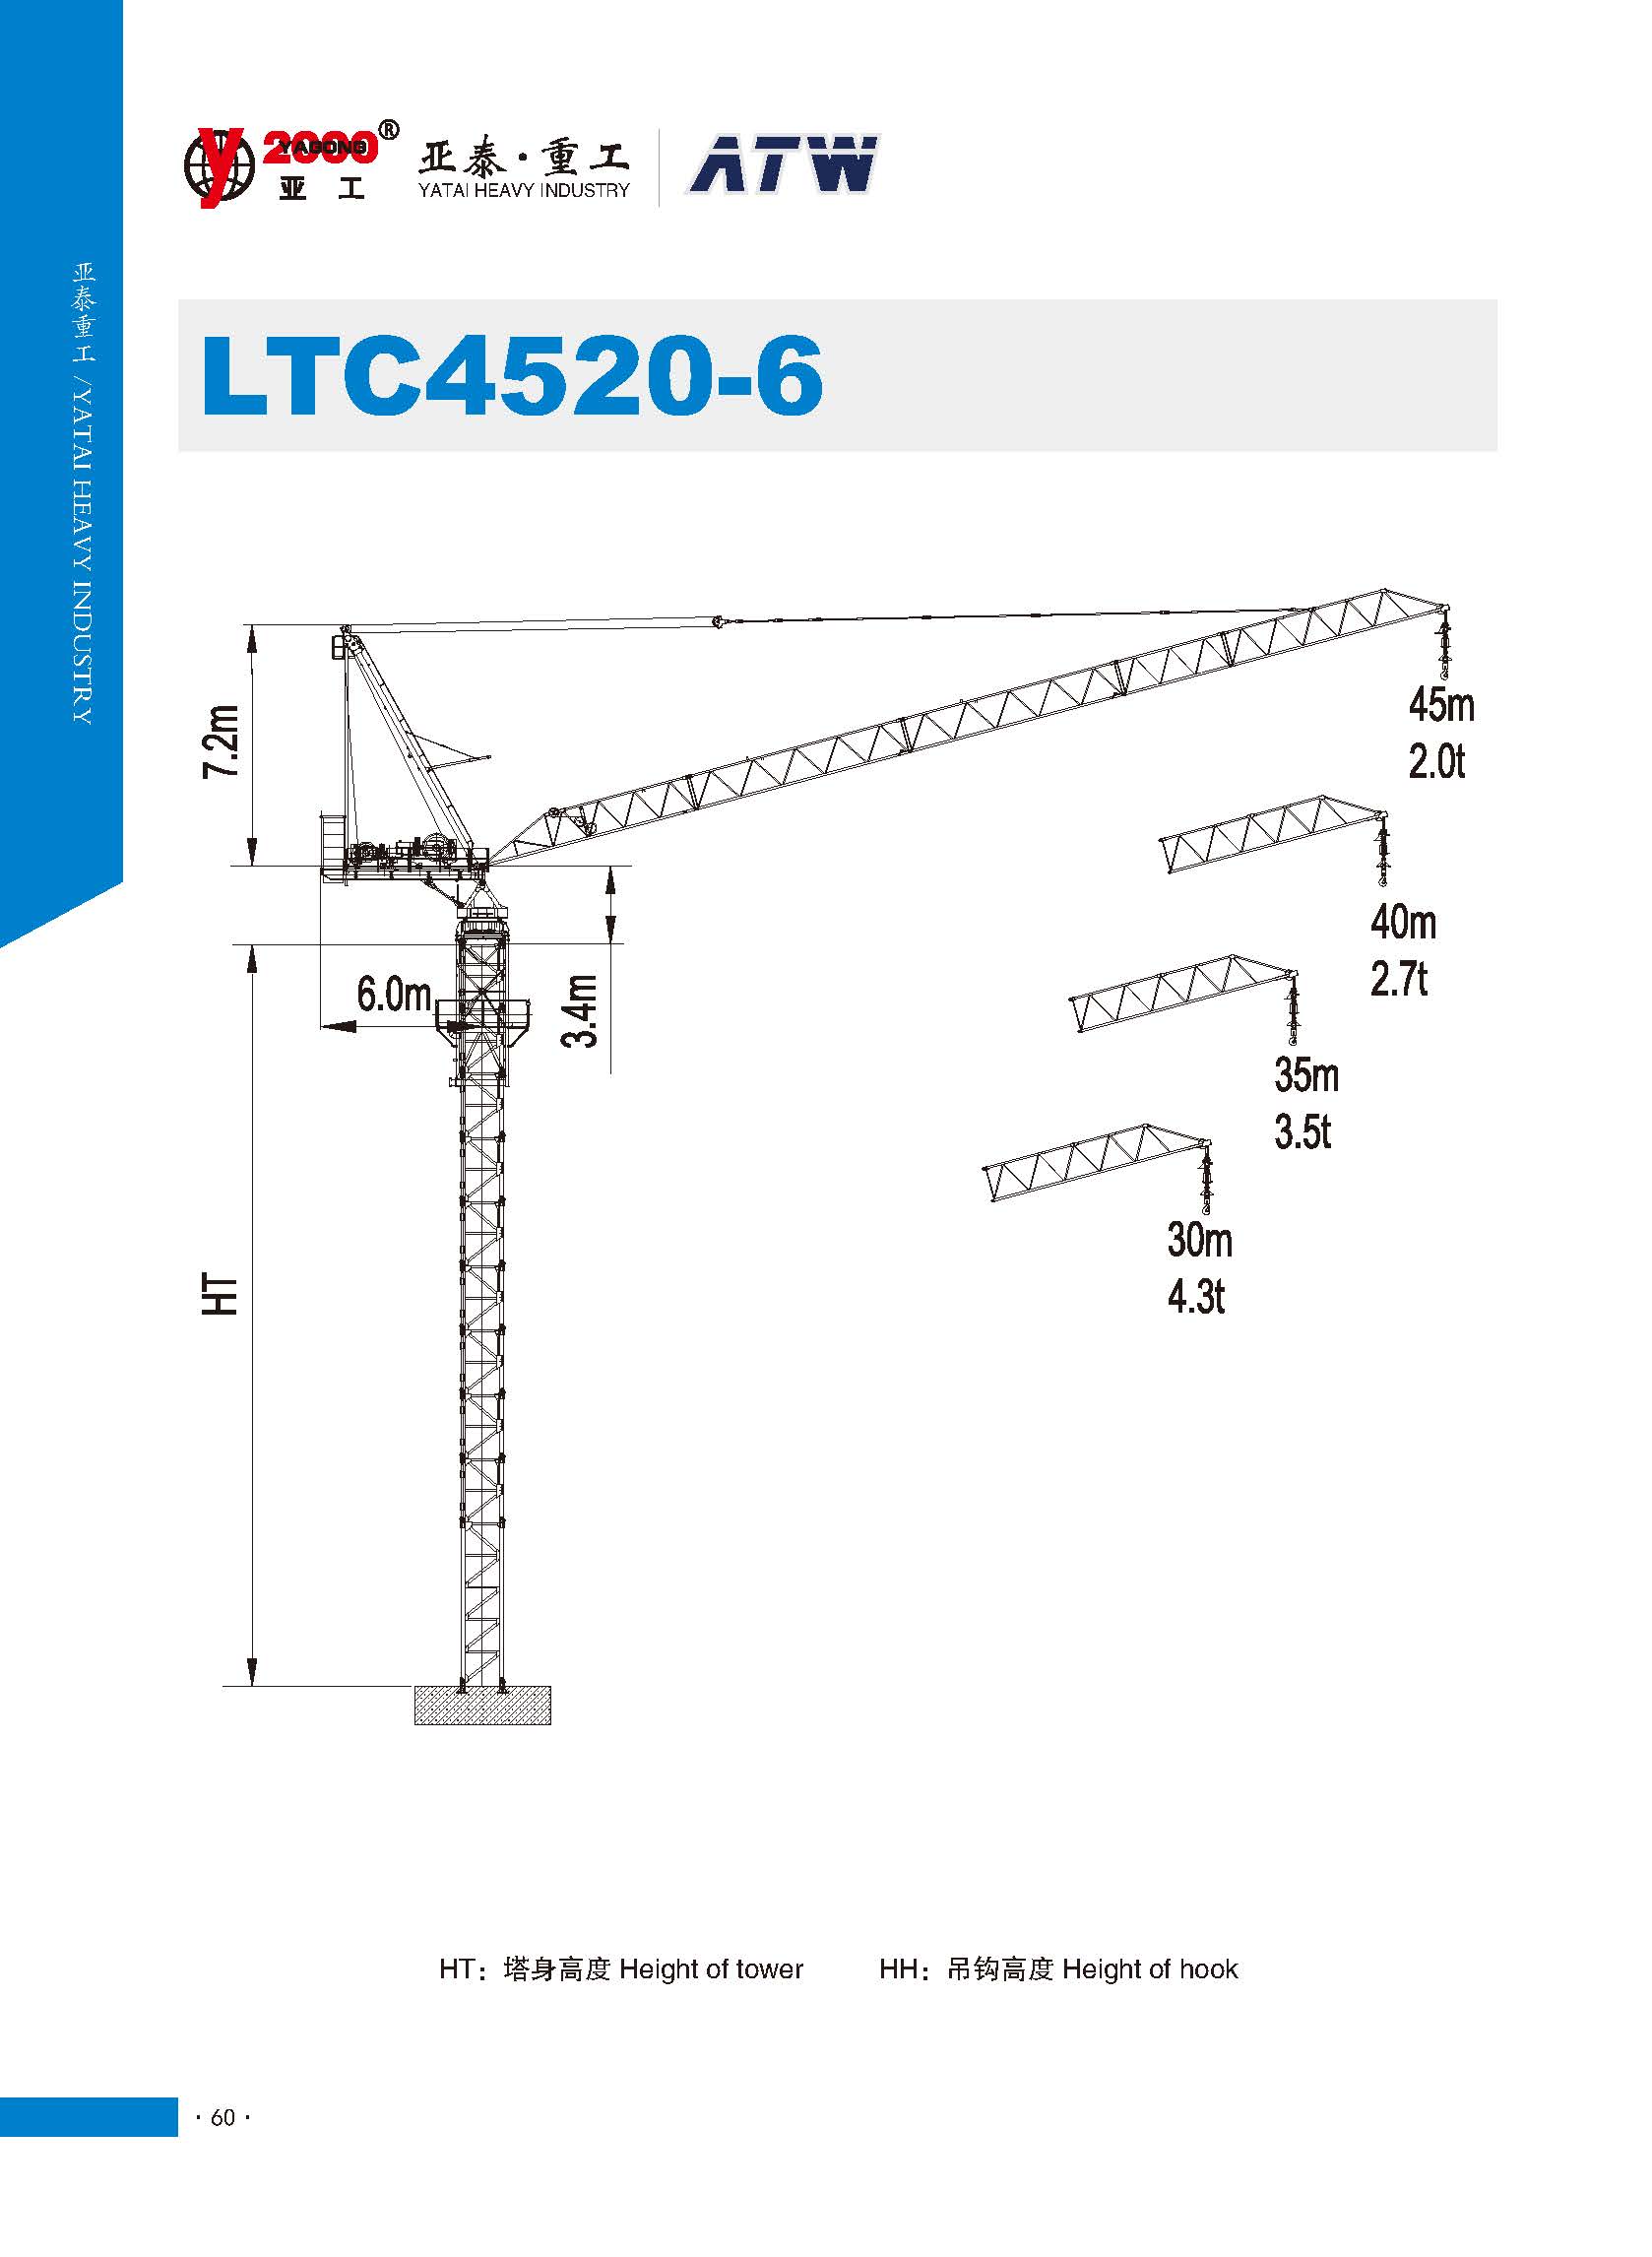 Topless Tower Crane LTC4520-6